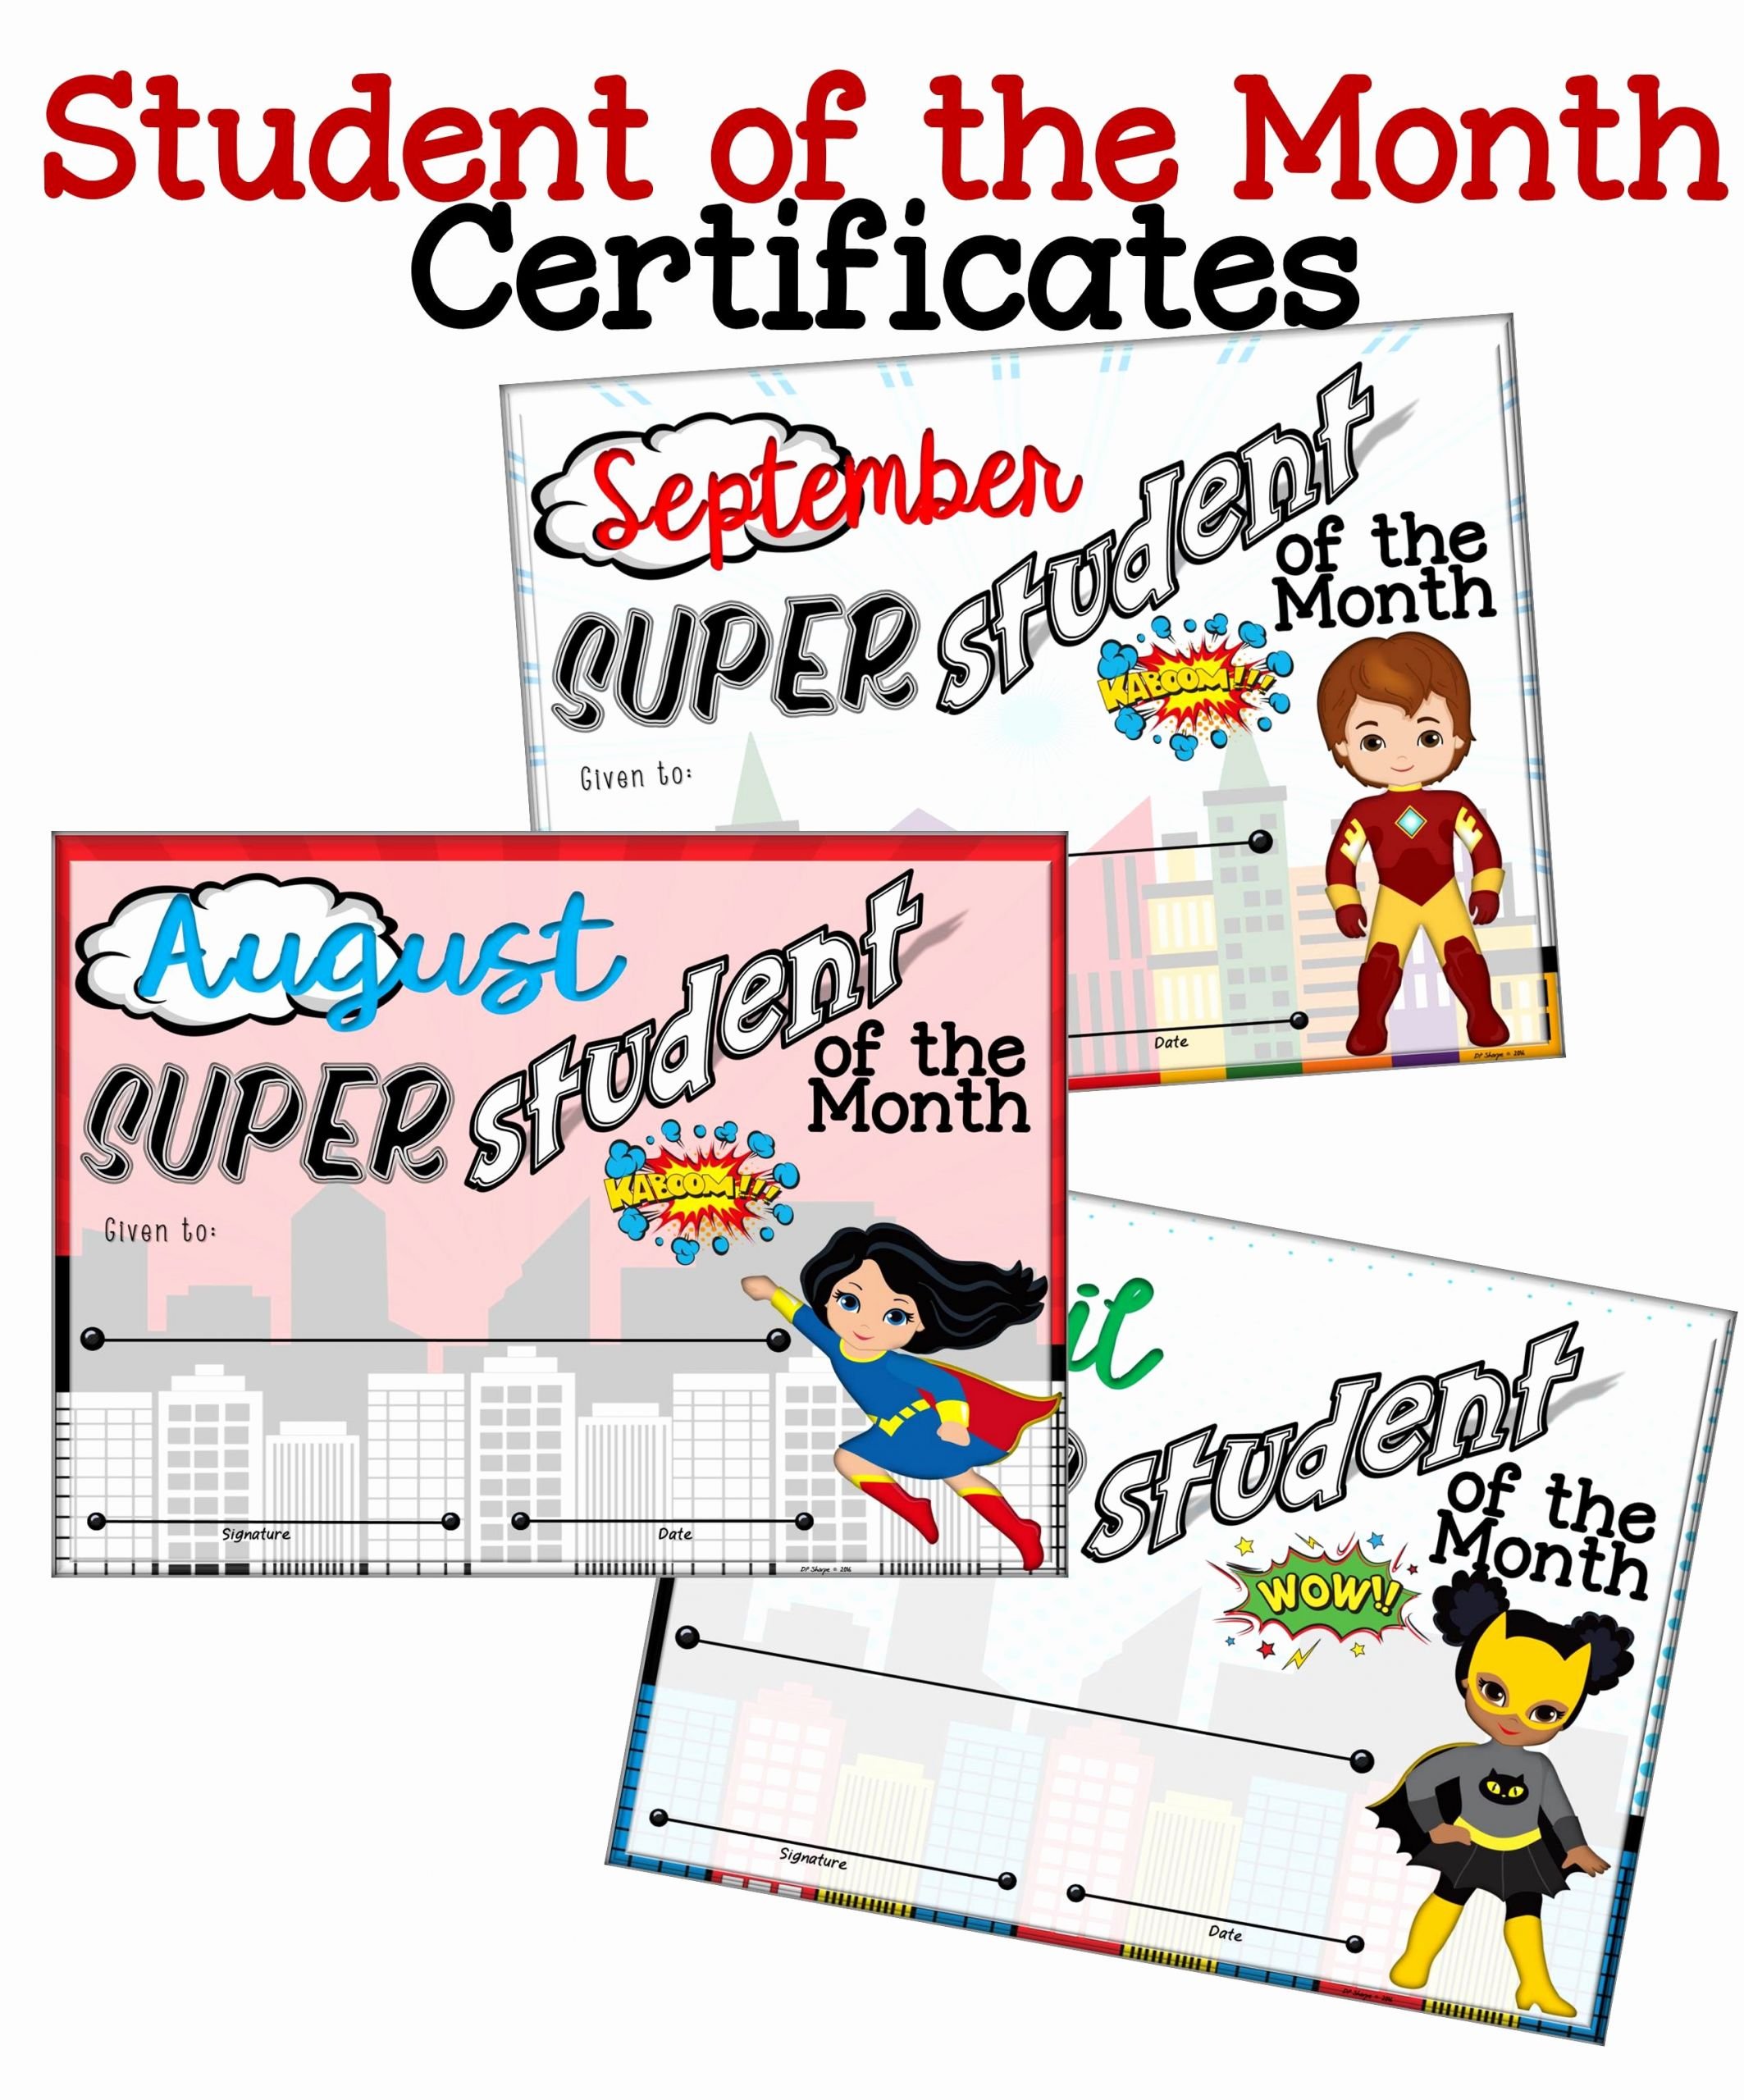 Teacher Of the Month Certificate Lovely Student Of the Month Certificates Super Heroes